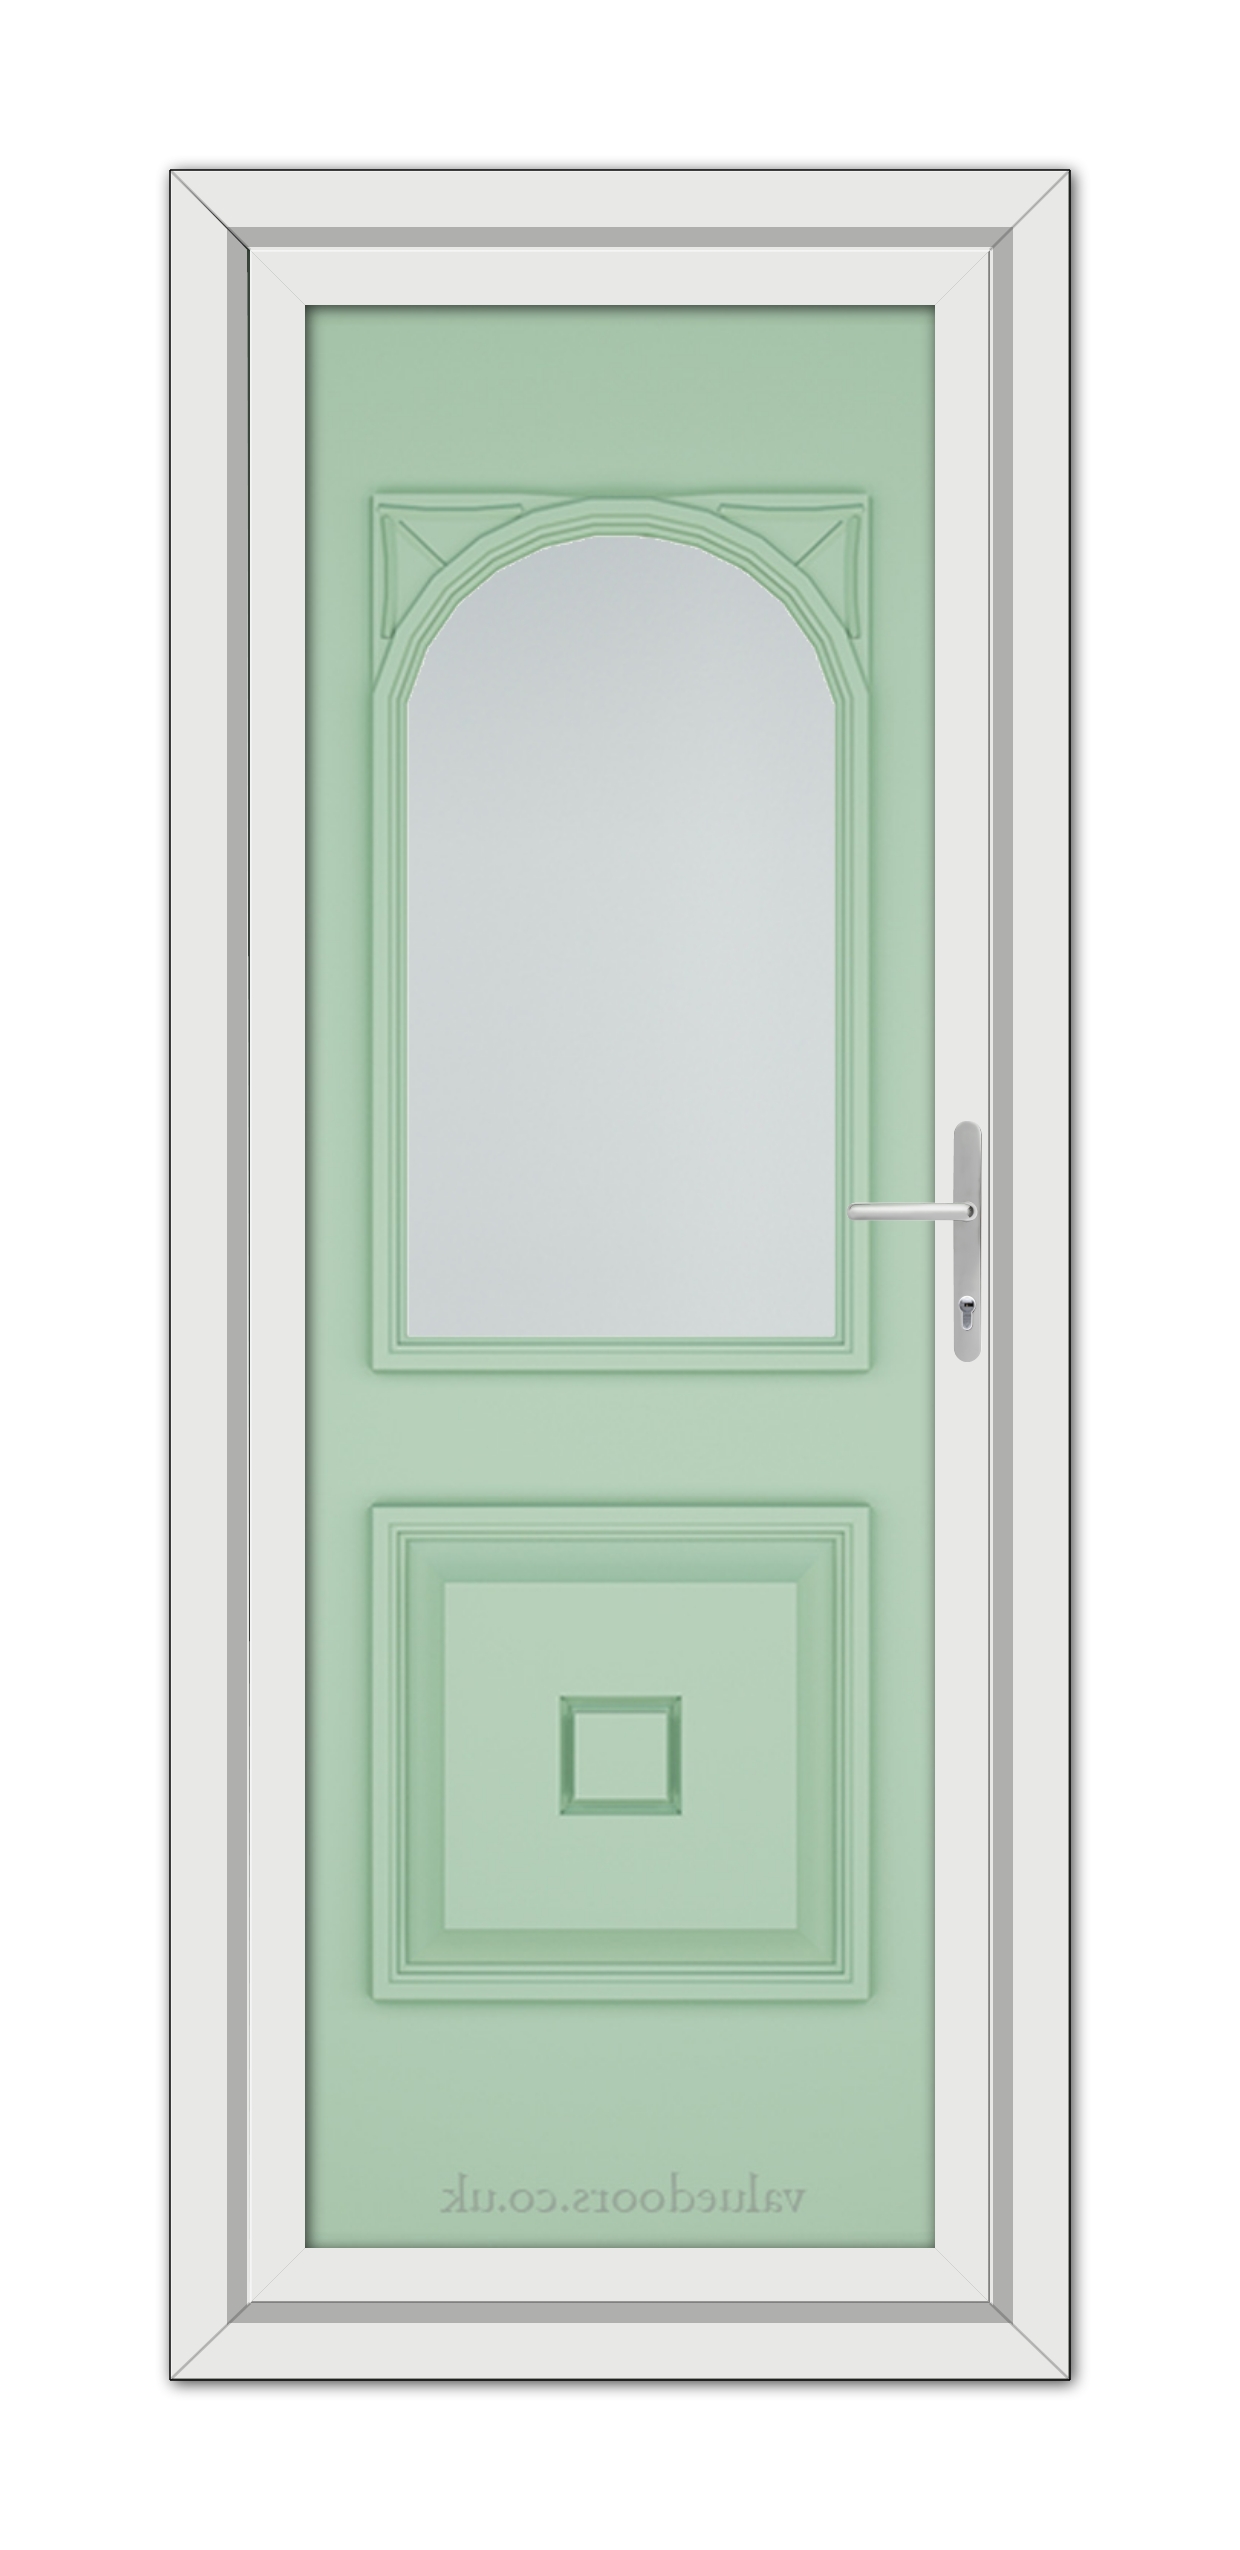 A close-up of a Chartwell Green Reims uPVC Door.